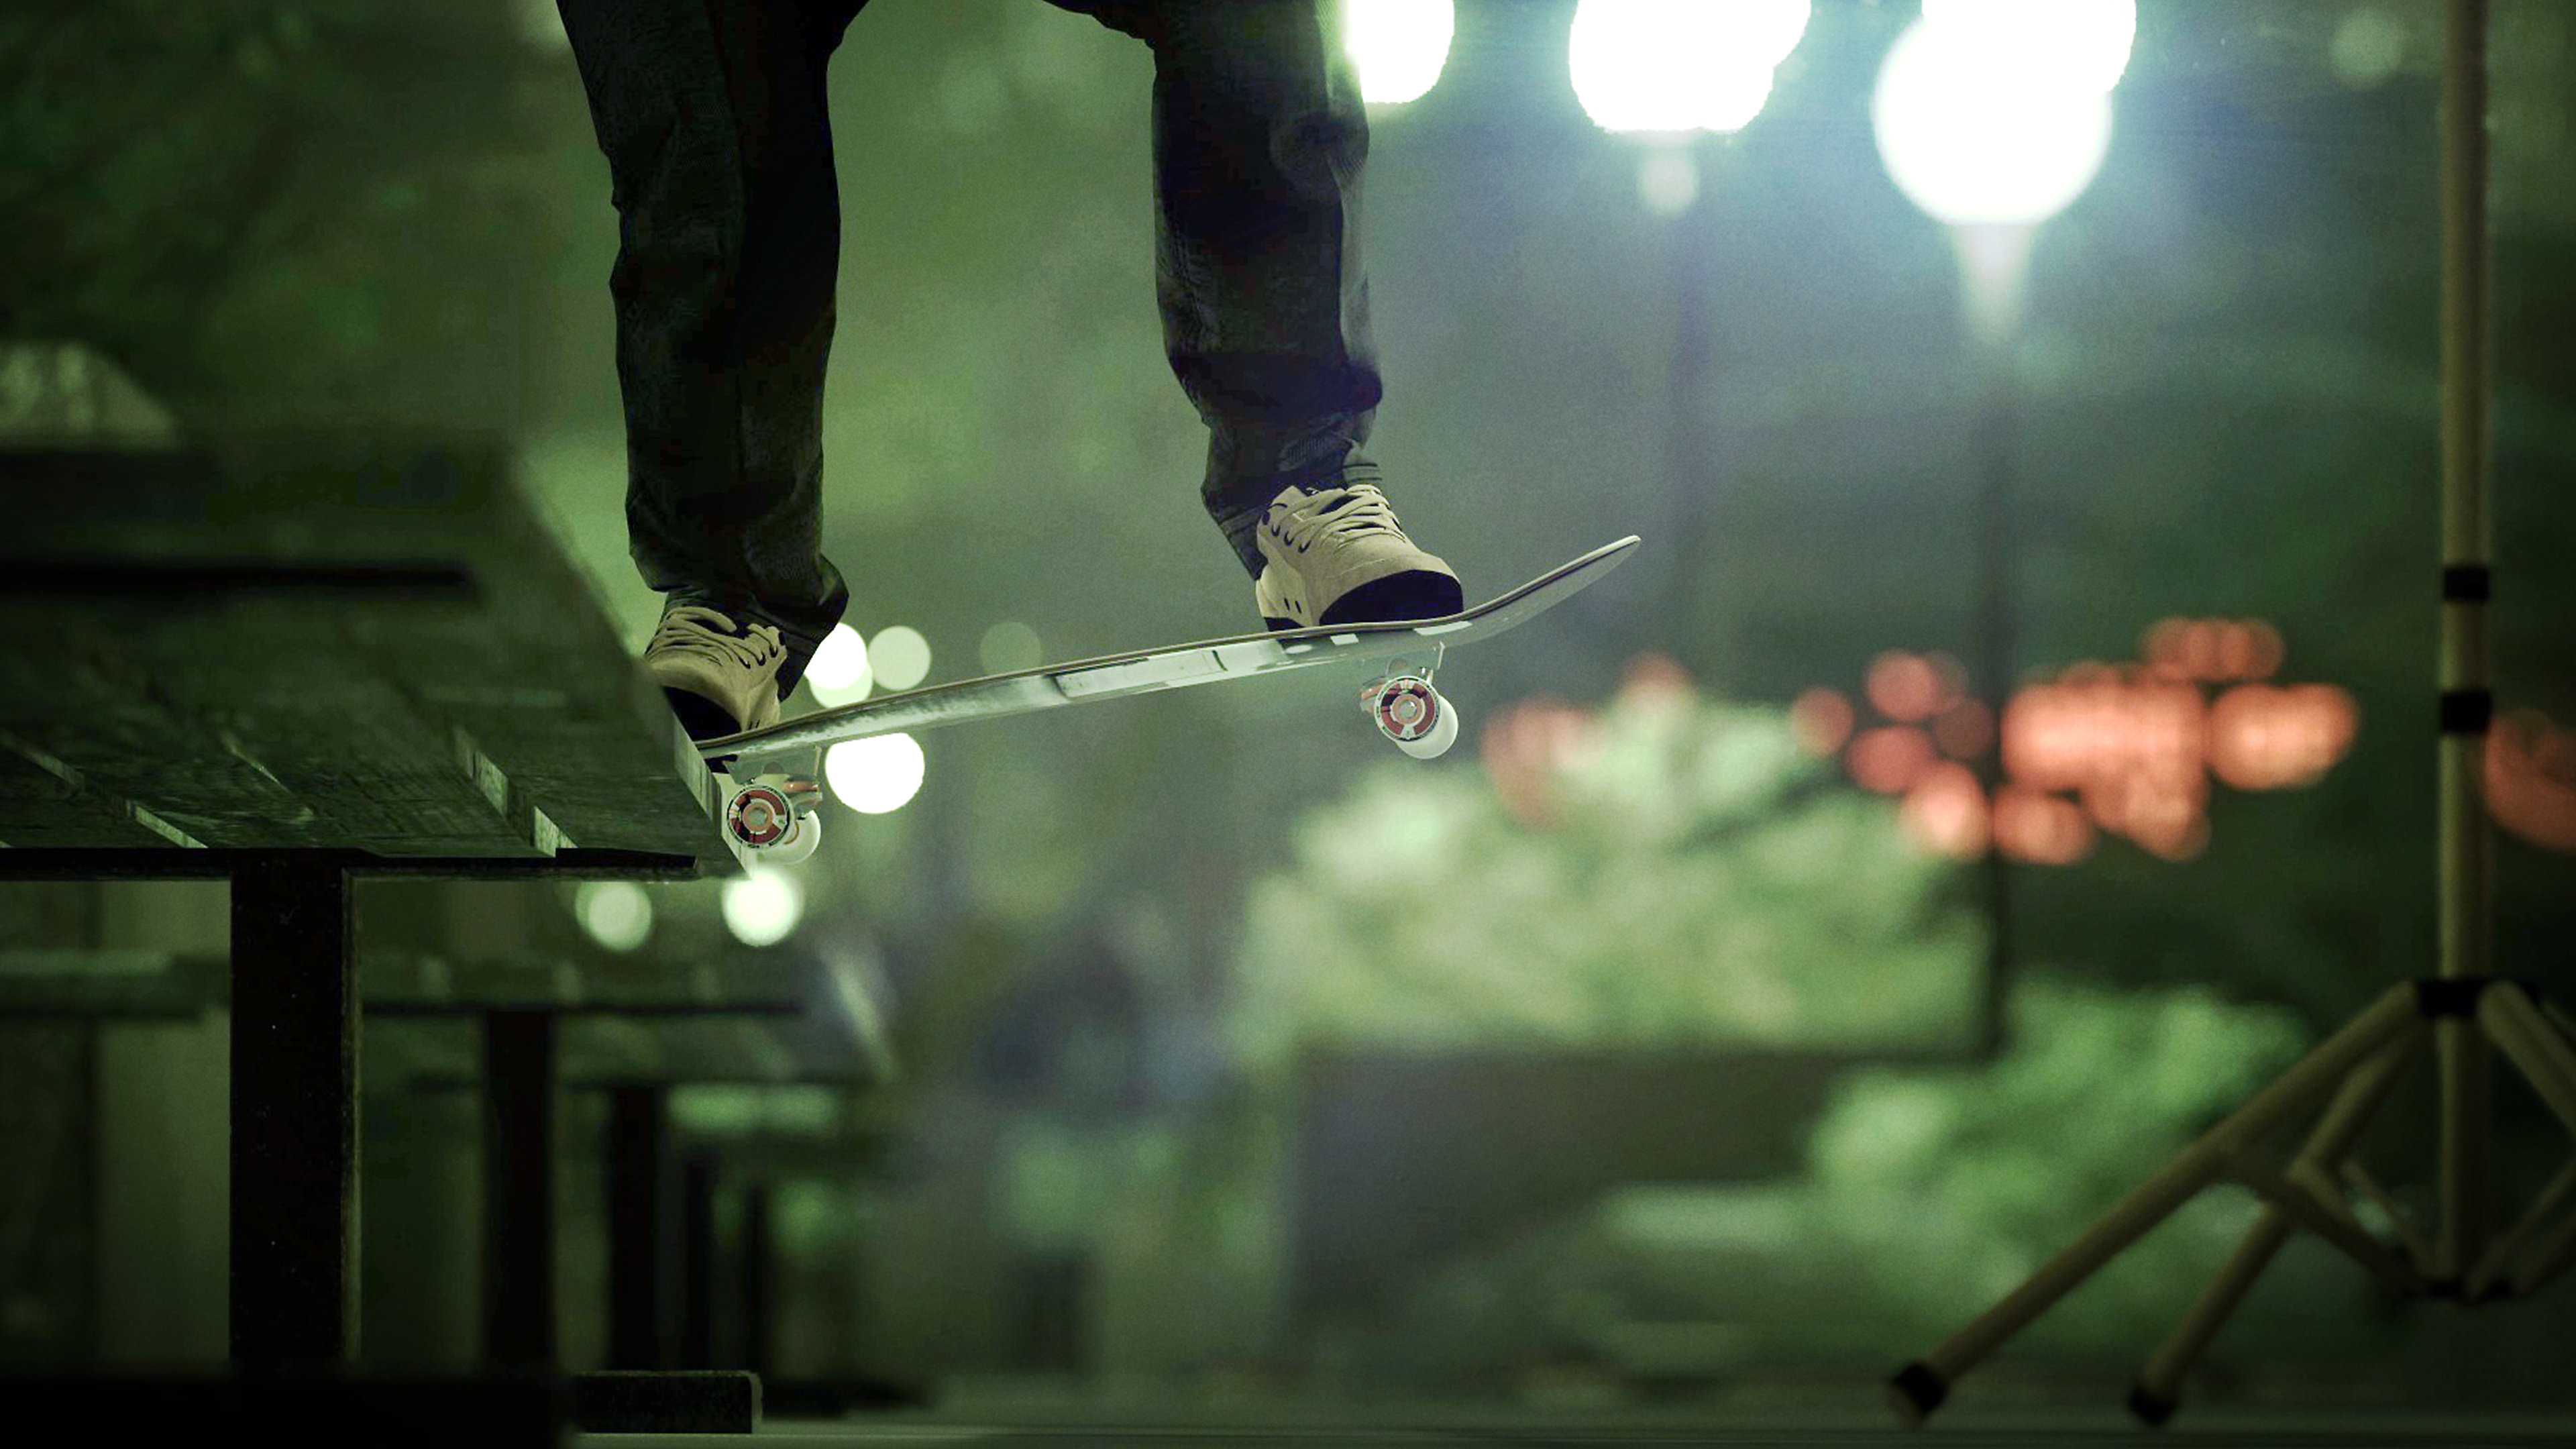 《Session:Skate Sim》截屏，显示一名滑板玩家在辗磨长椅